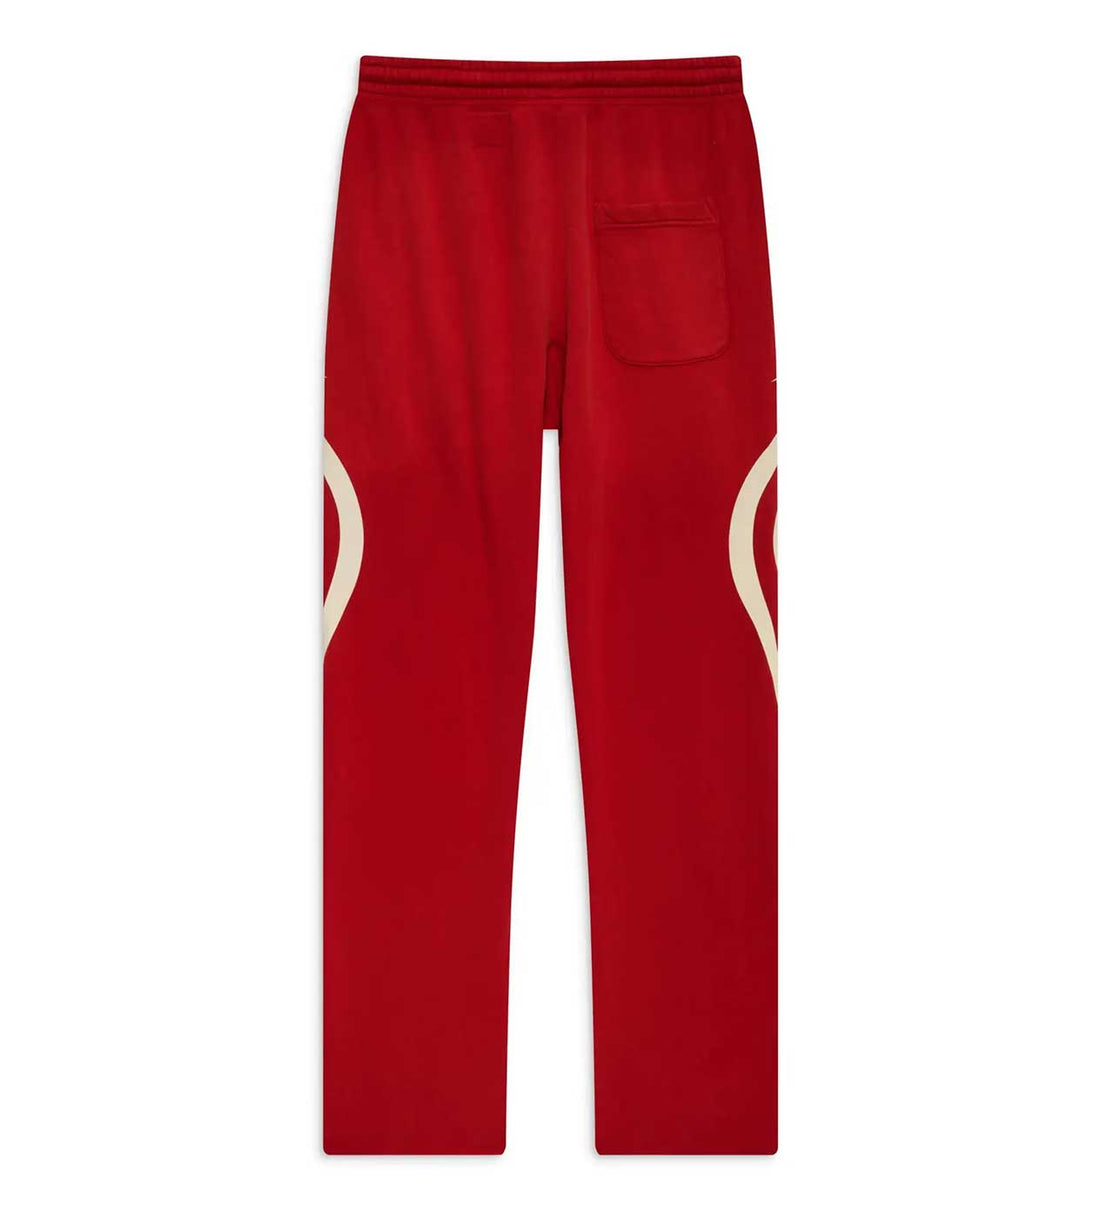 Hellstar Sports Sweatpants Red Back View